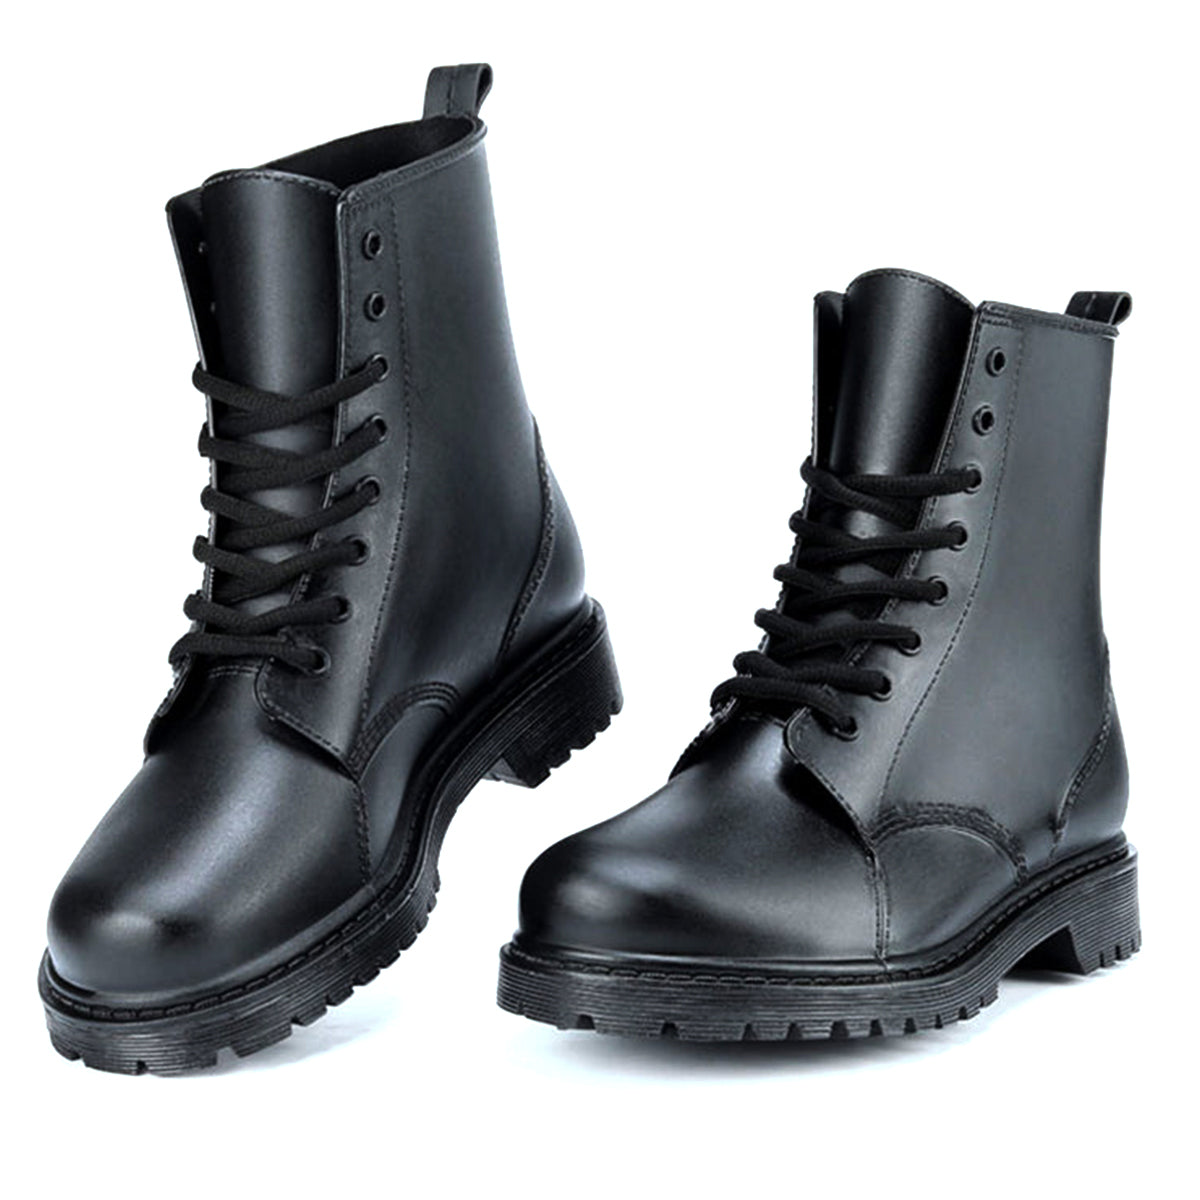 Nomad Black Waterproof Boots